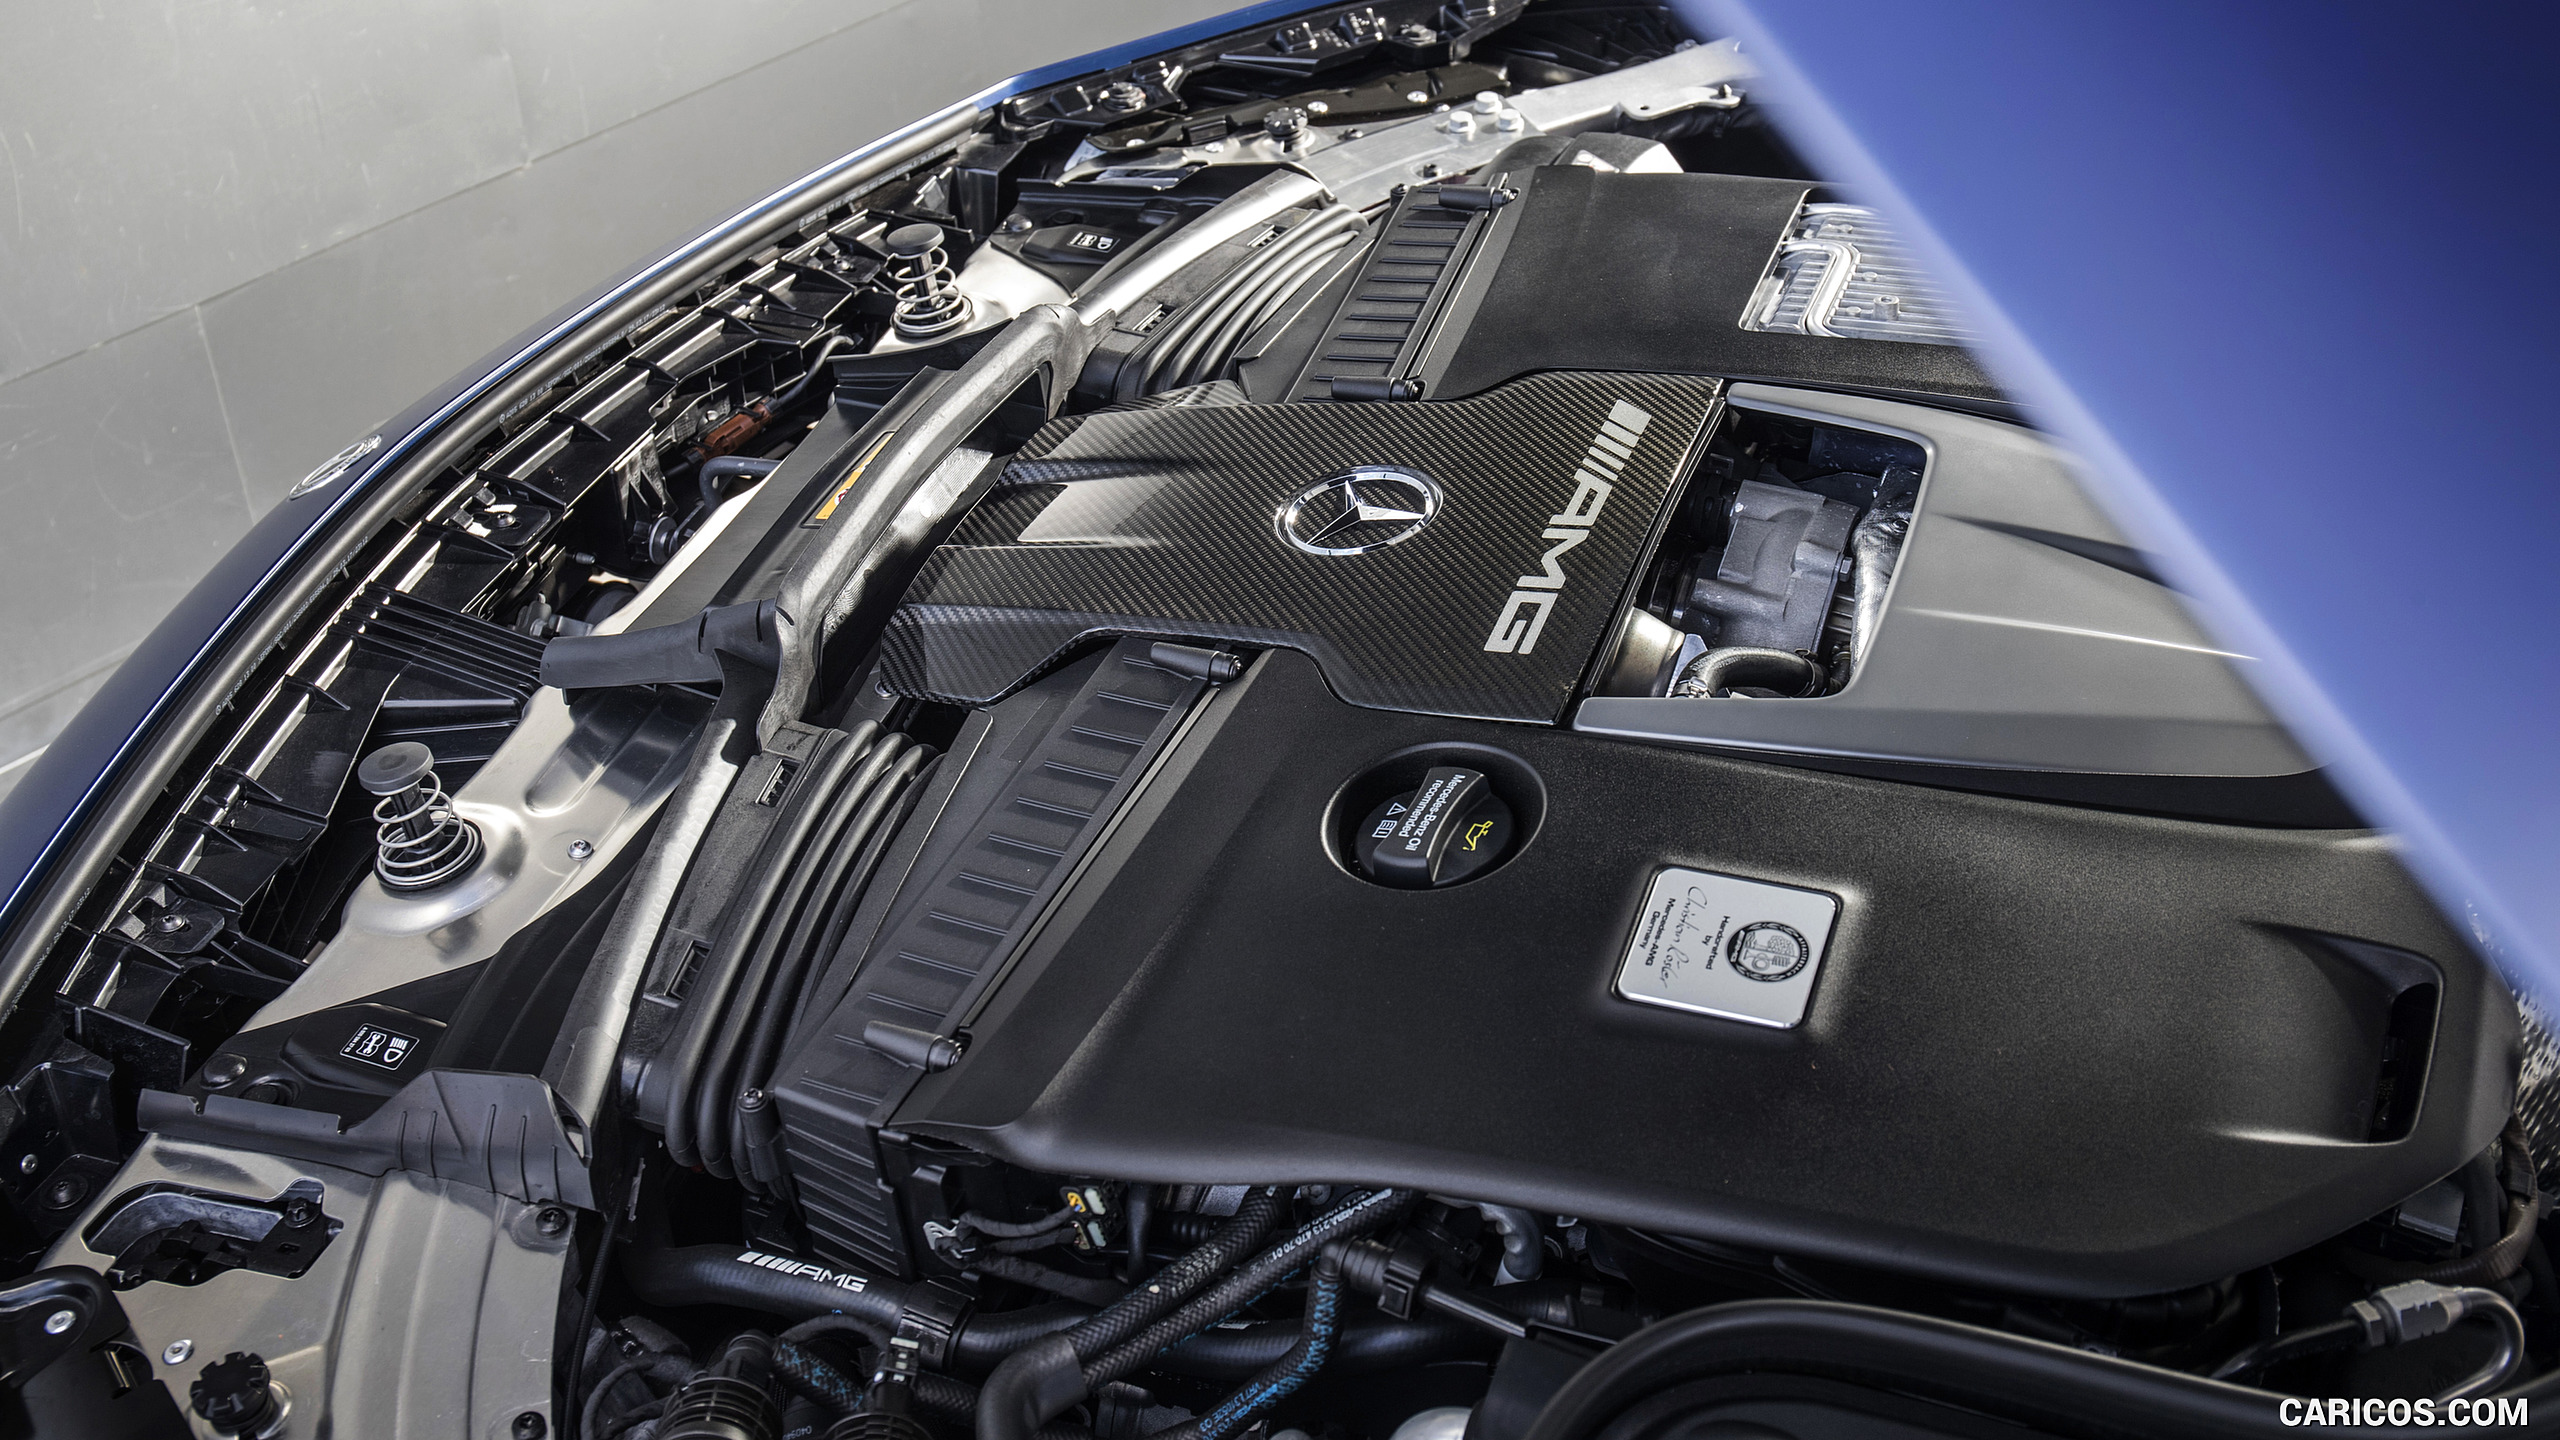 2019 Mercedes-AMG GT 63 S 4MATIC+ 4-Door Coupe - Engine, #150 of 427